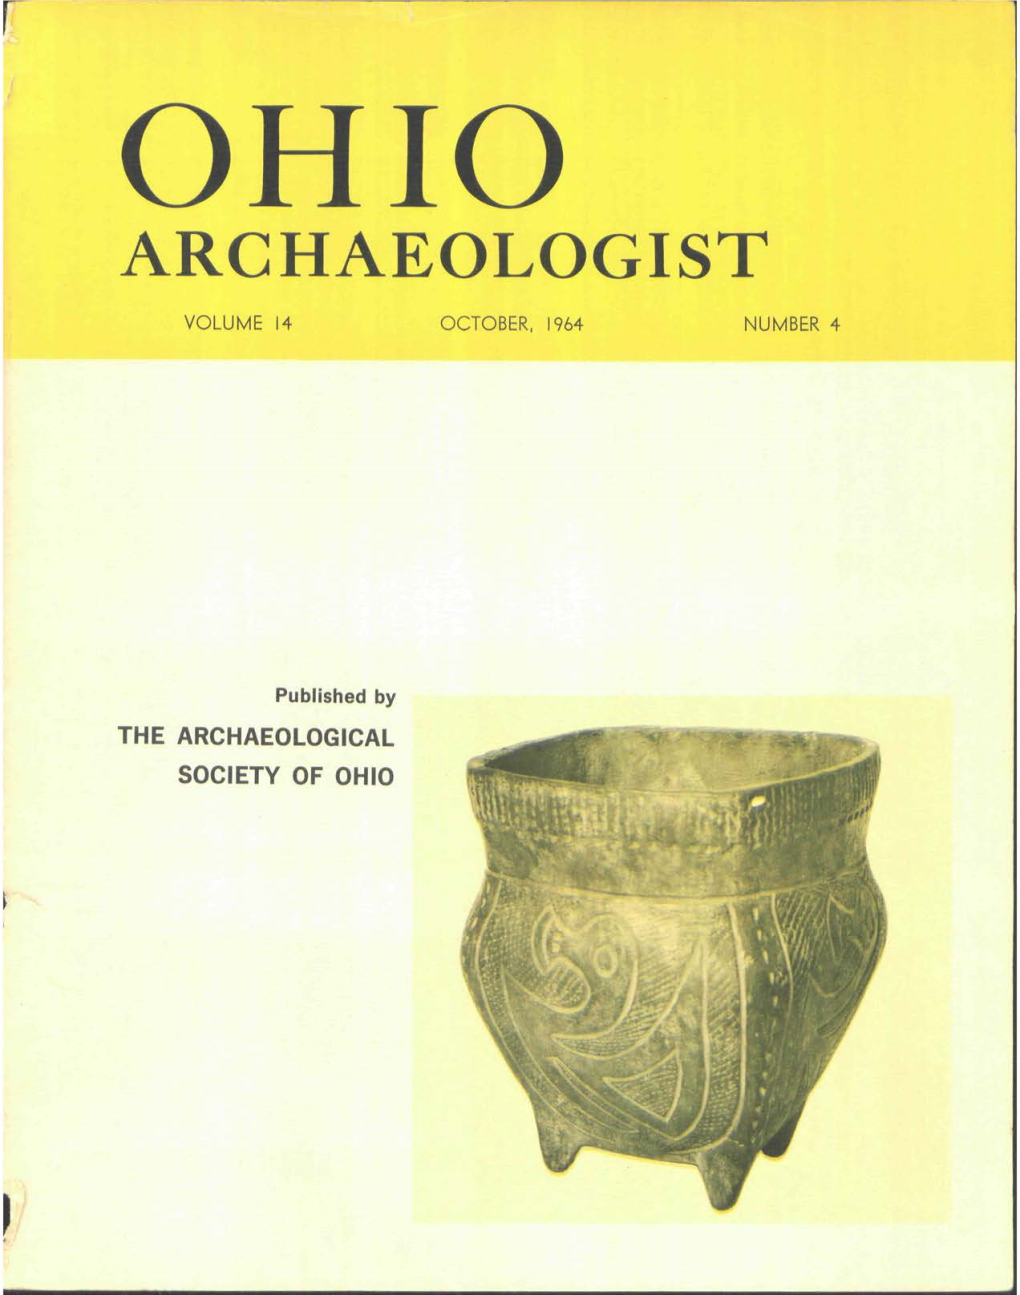 Archaeologist Volume 14 October, 1964 Number 4